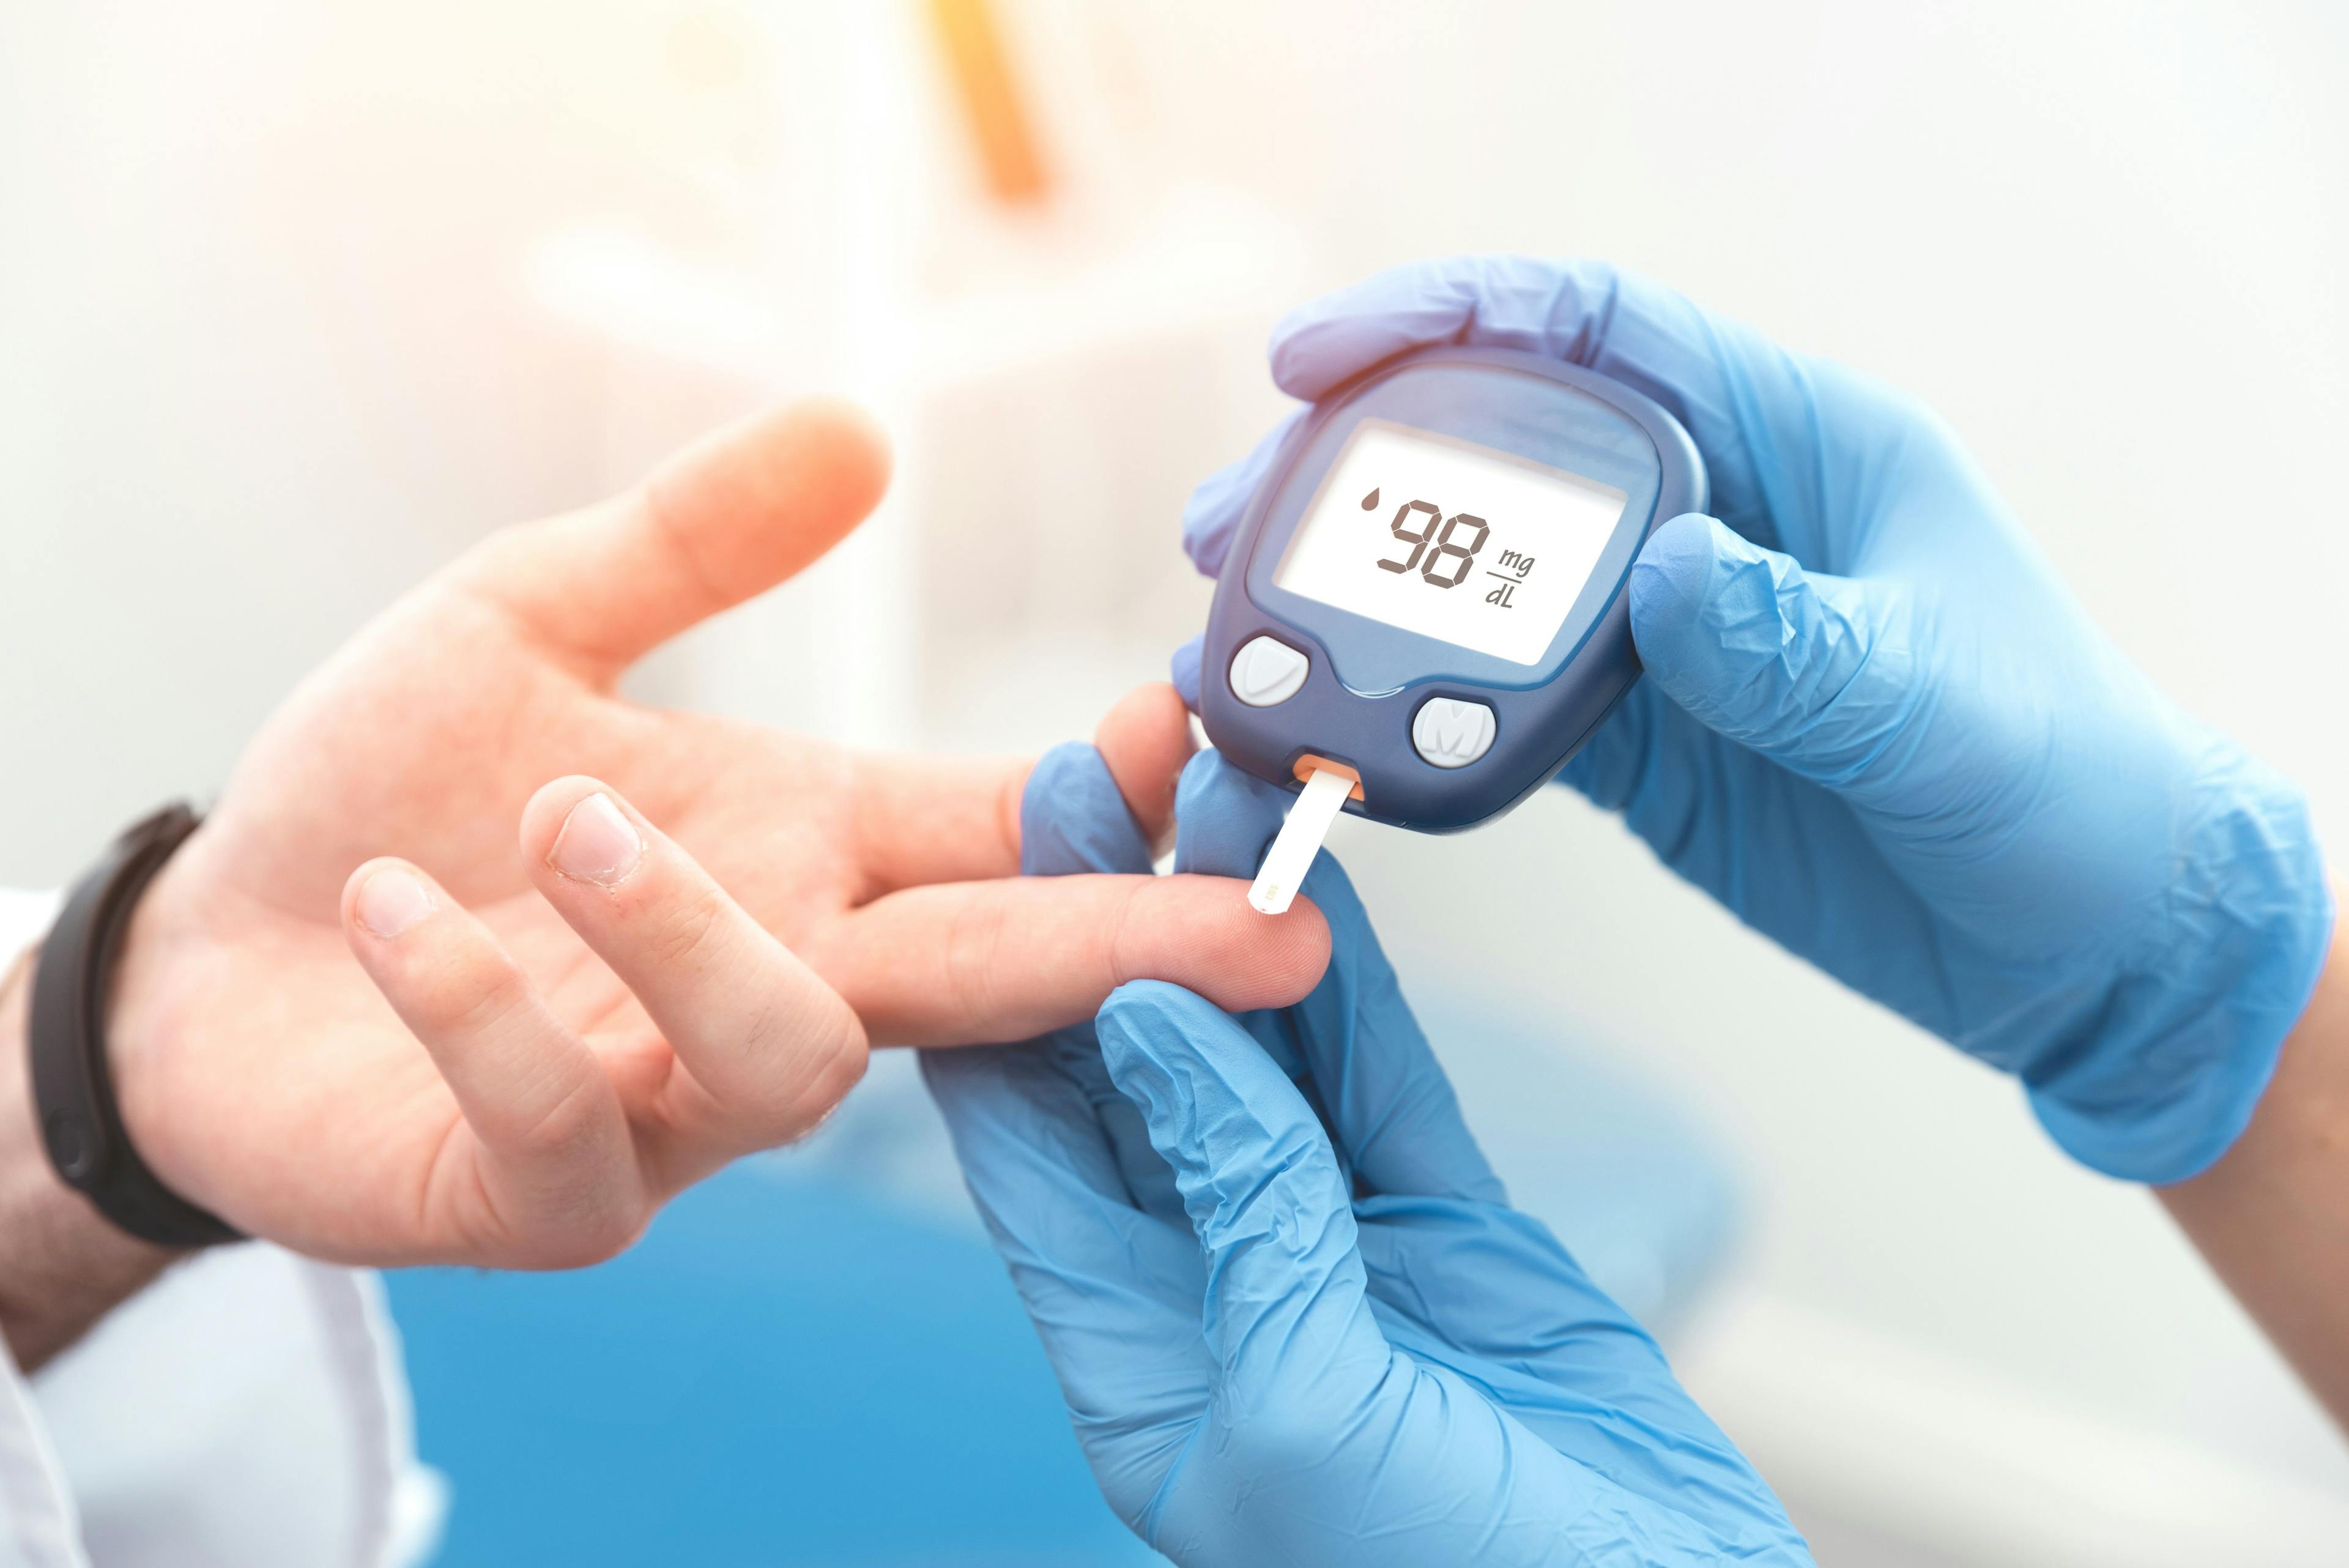 Gestational diabetes mellitus rate increased from 2016 to 2020